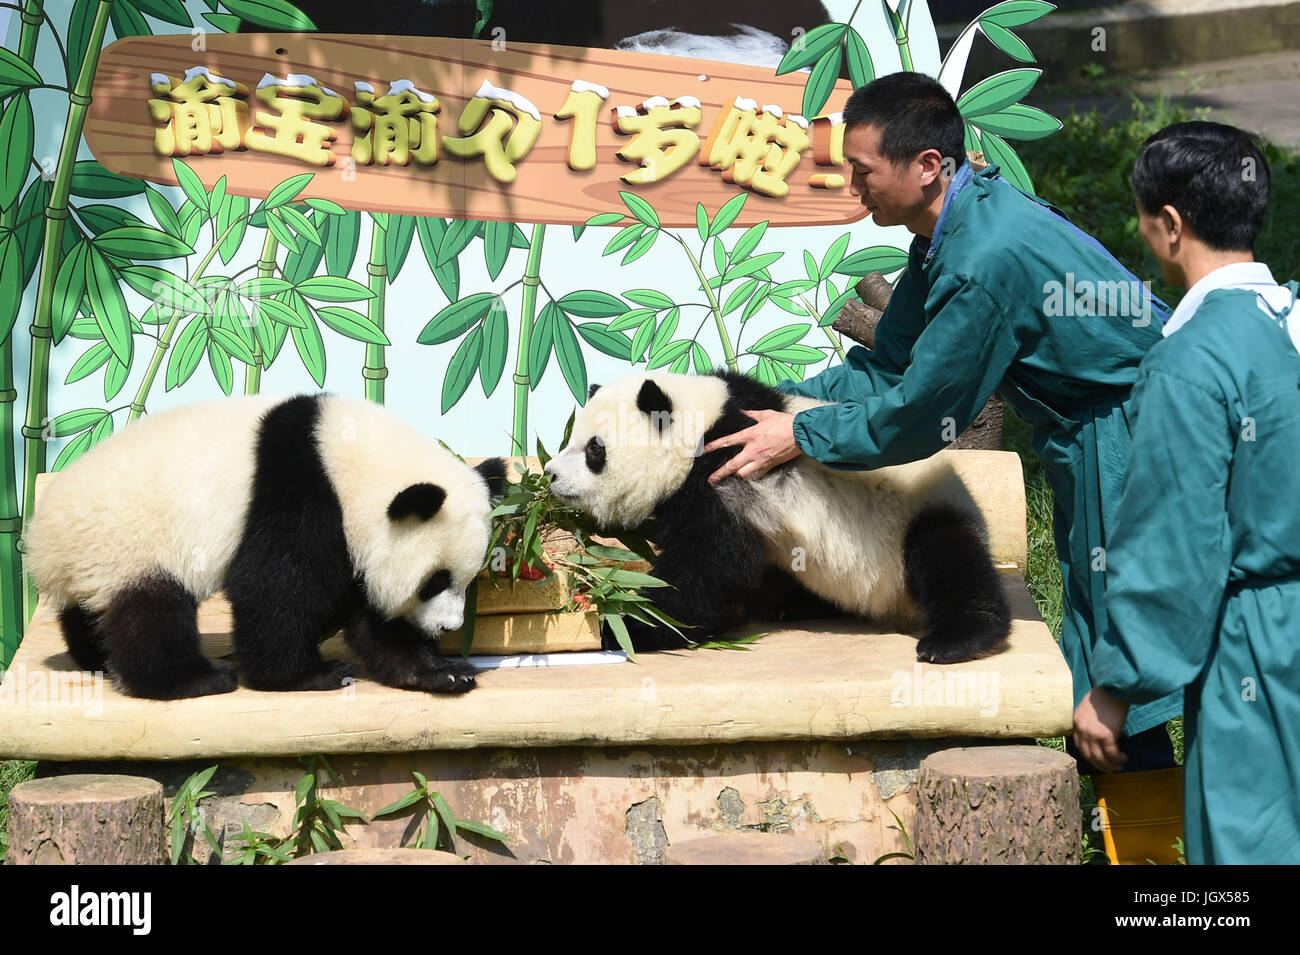 Панда живет в зоопарке. Чунцин зоопарк. Панда в Пекинском зоопарке. Пекинский зоопарк Китай. Зоопарк панд в Китае.